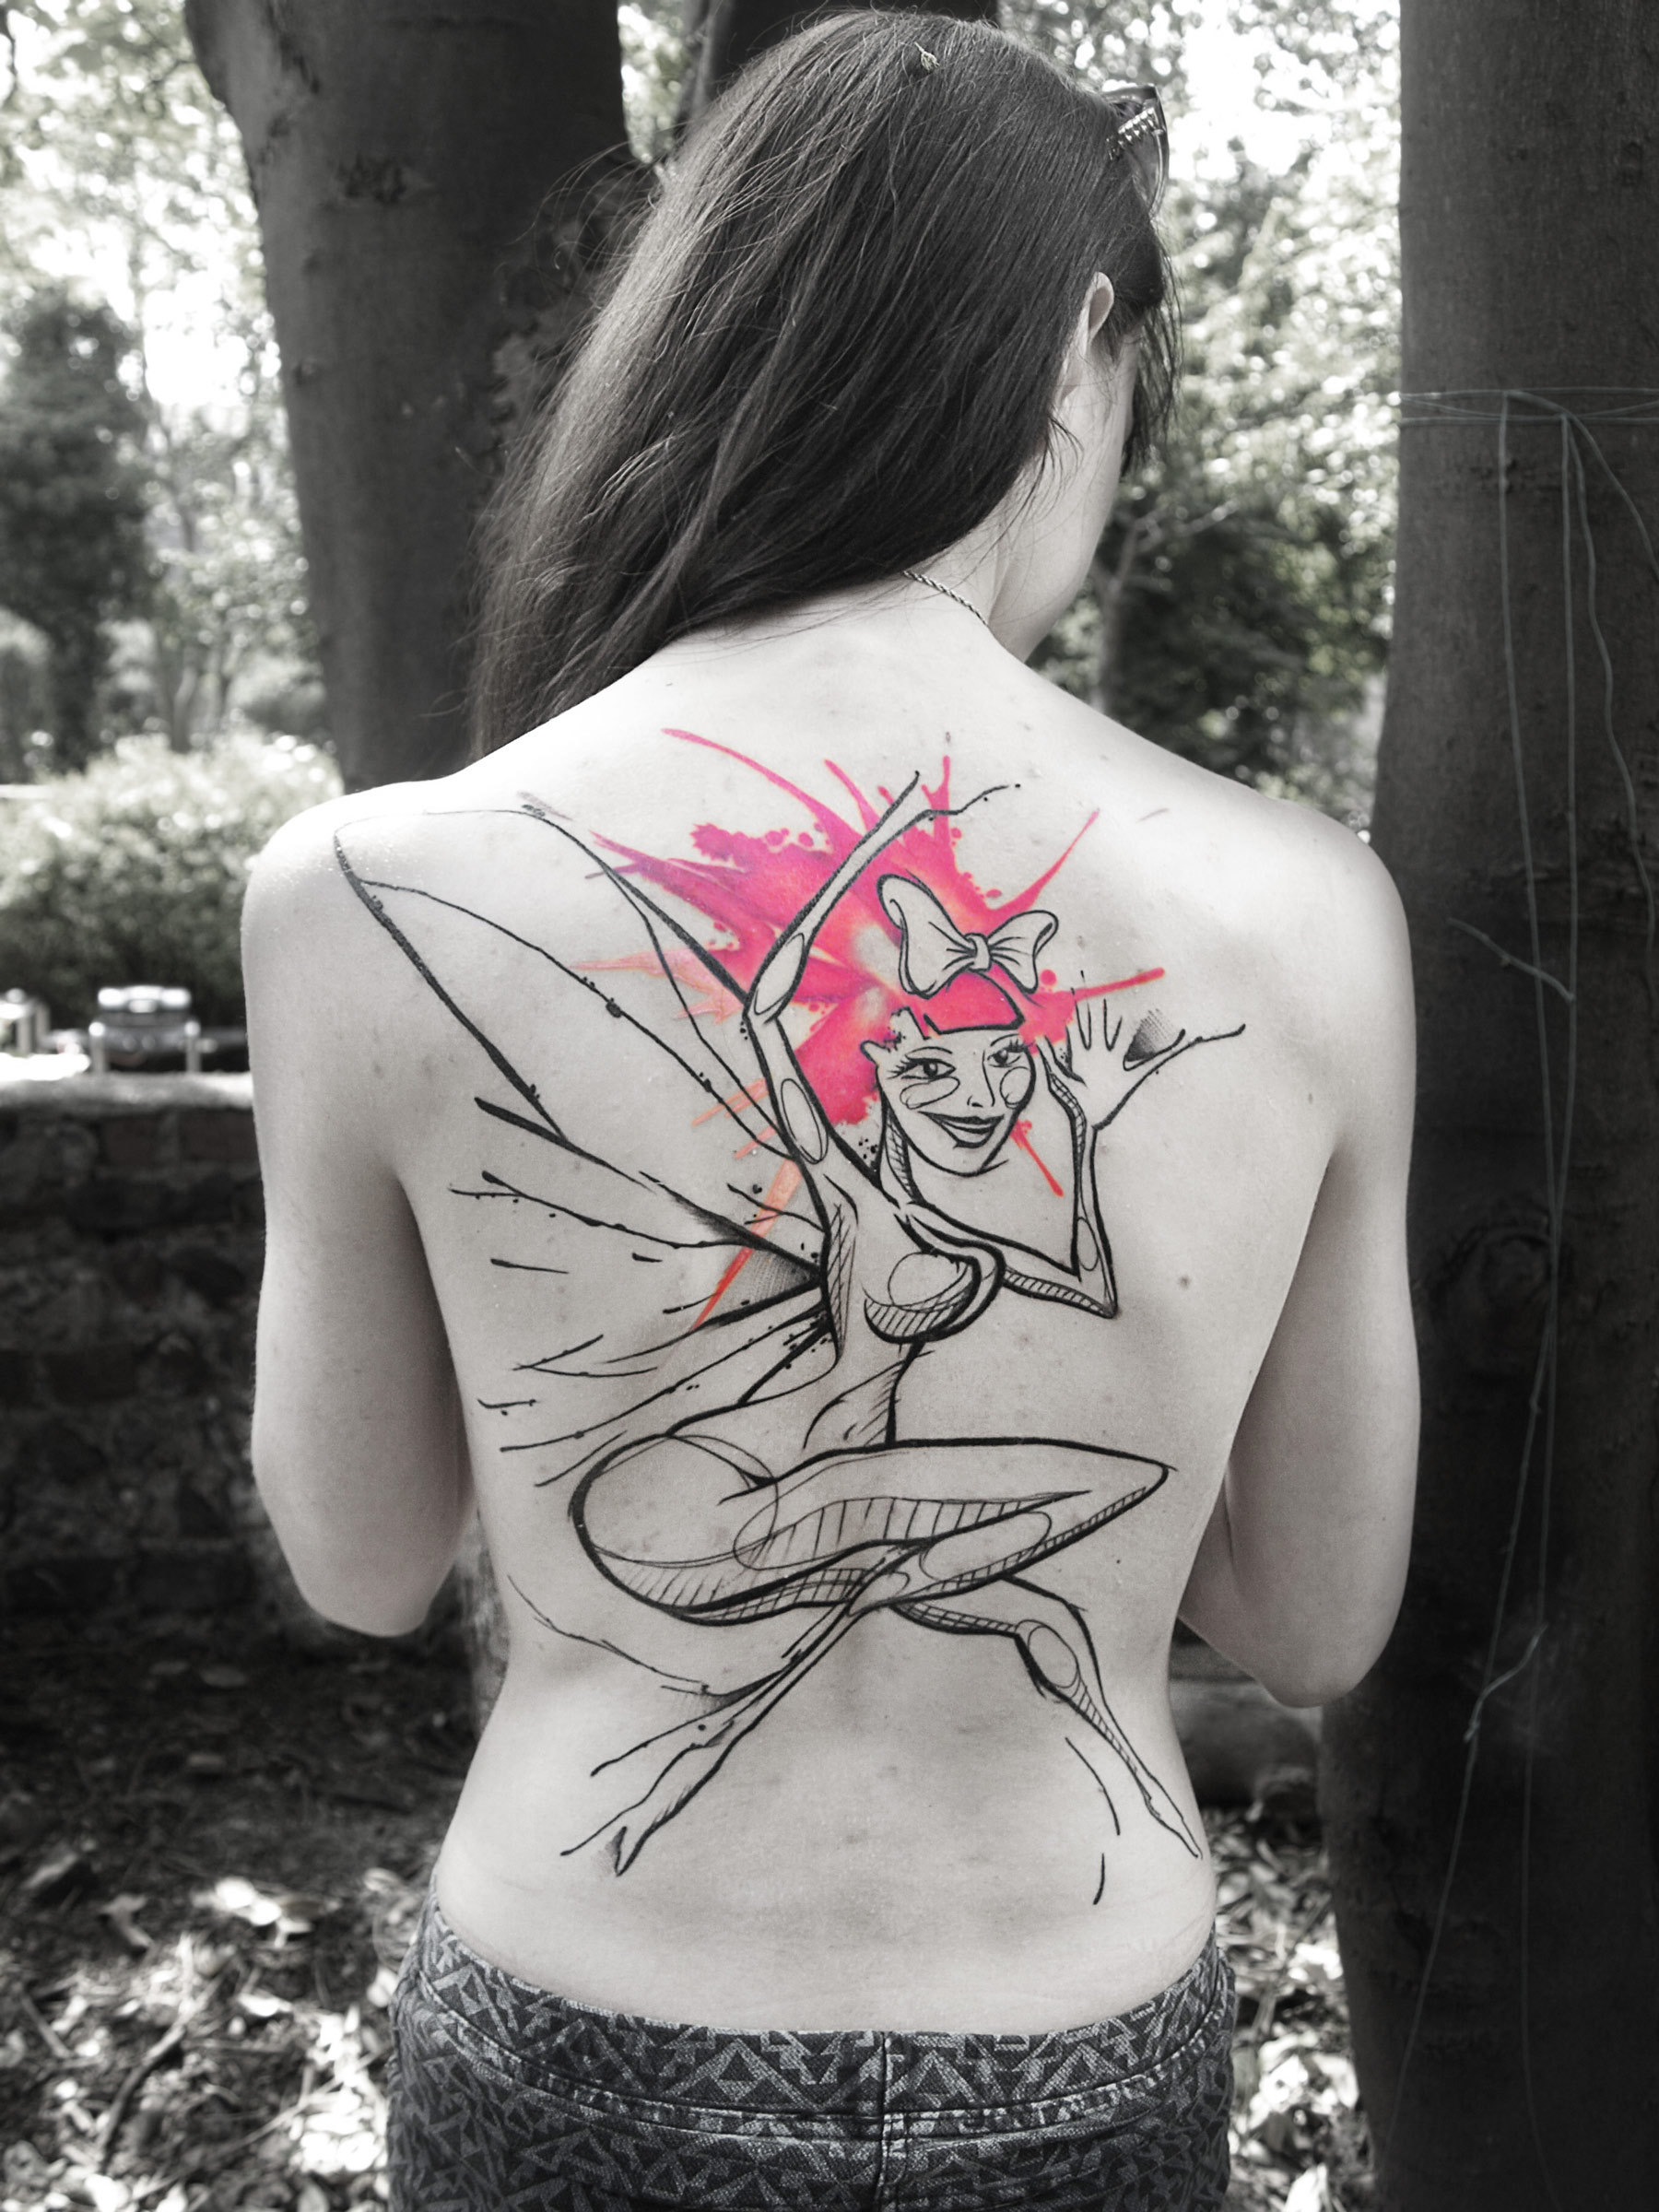 sorn-smb-tattoo-fairy-watercolour-brighton.jpg